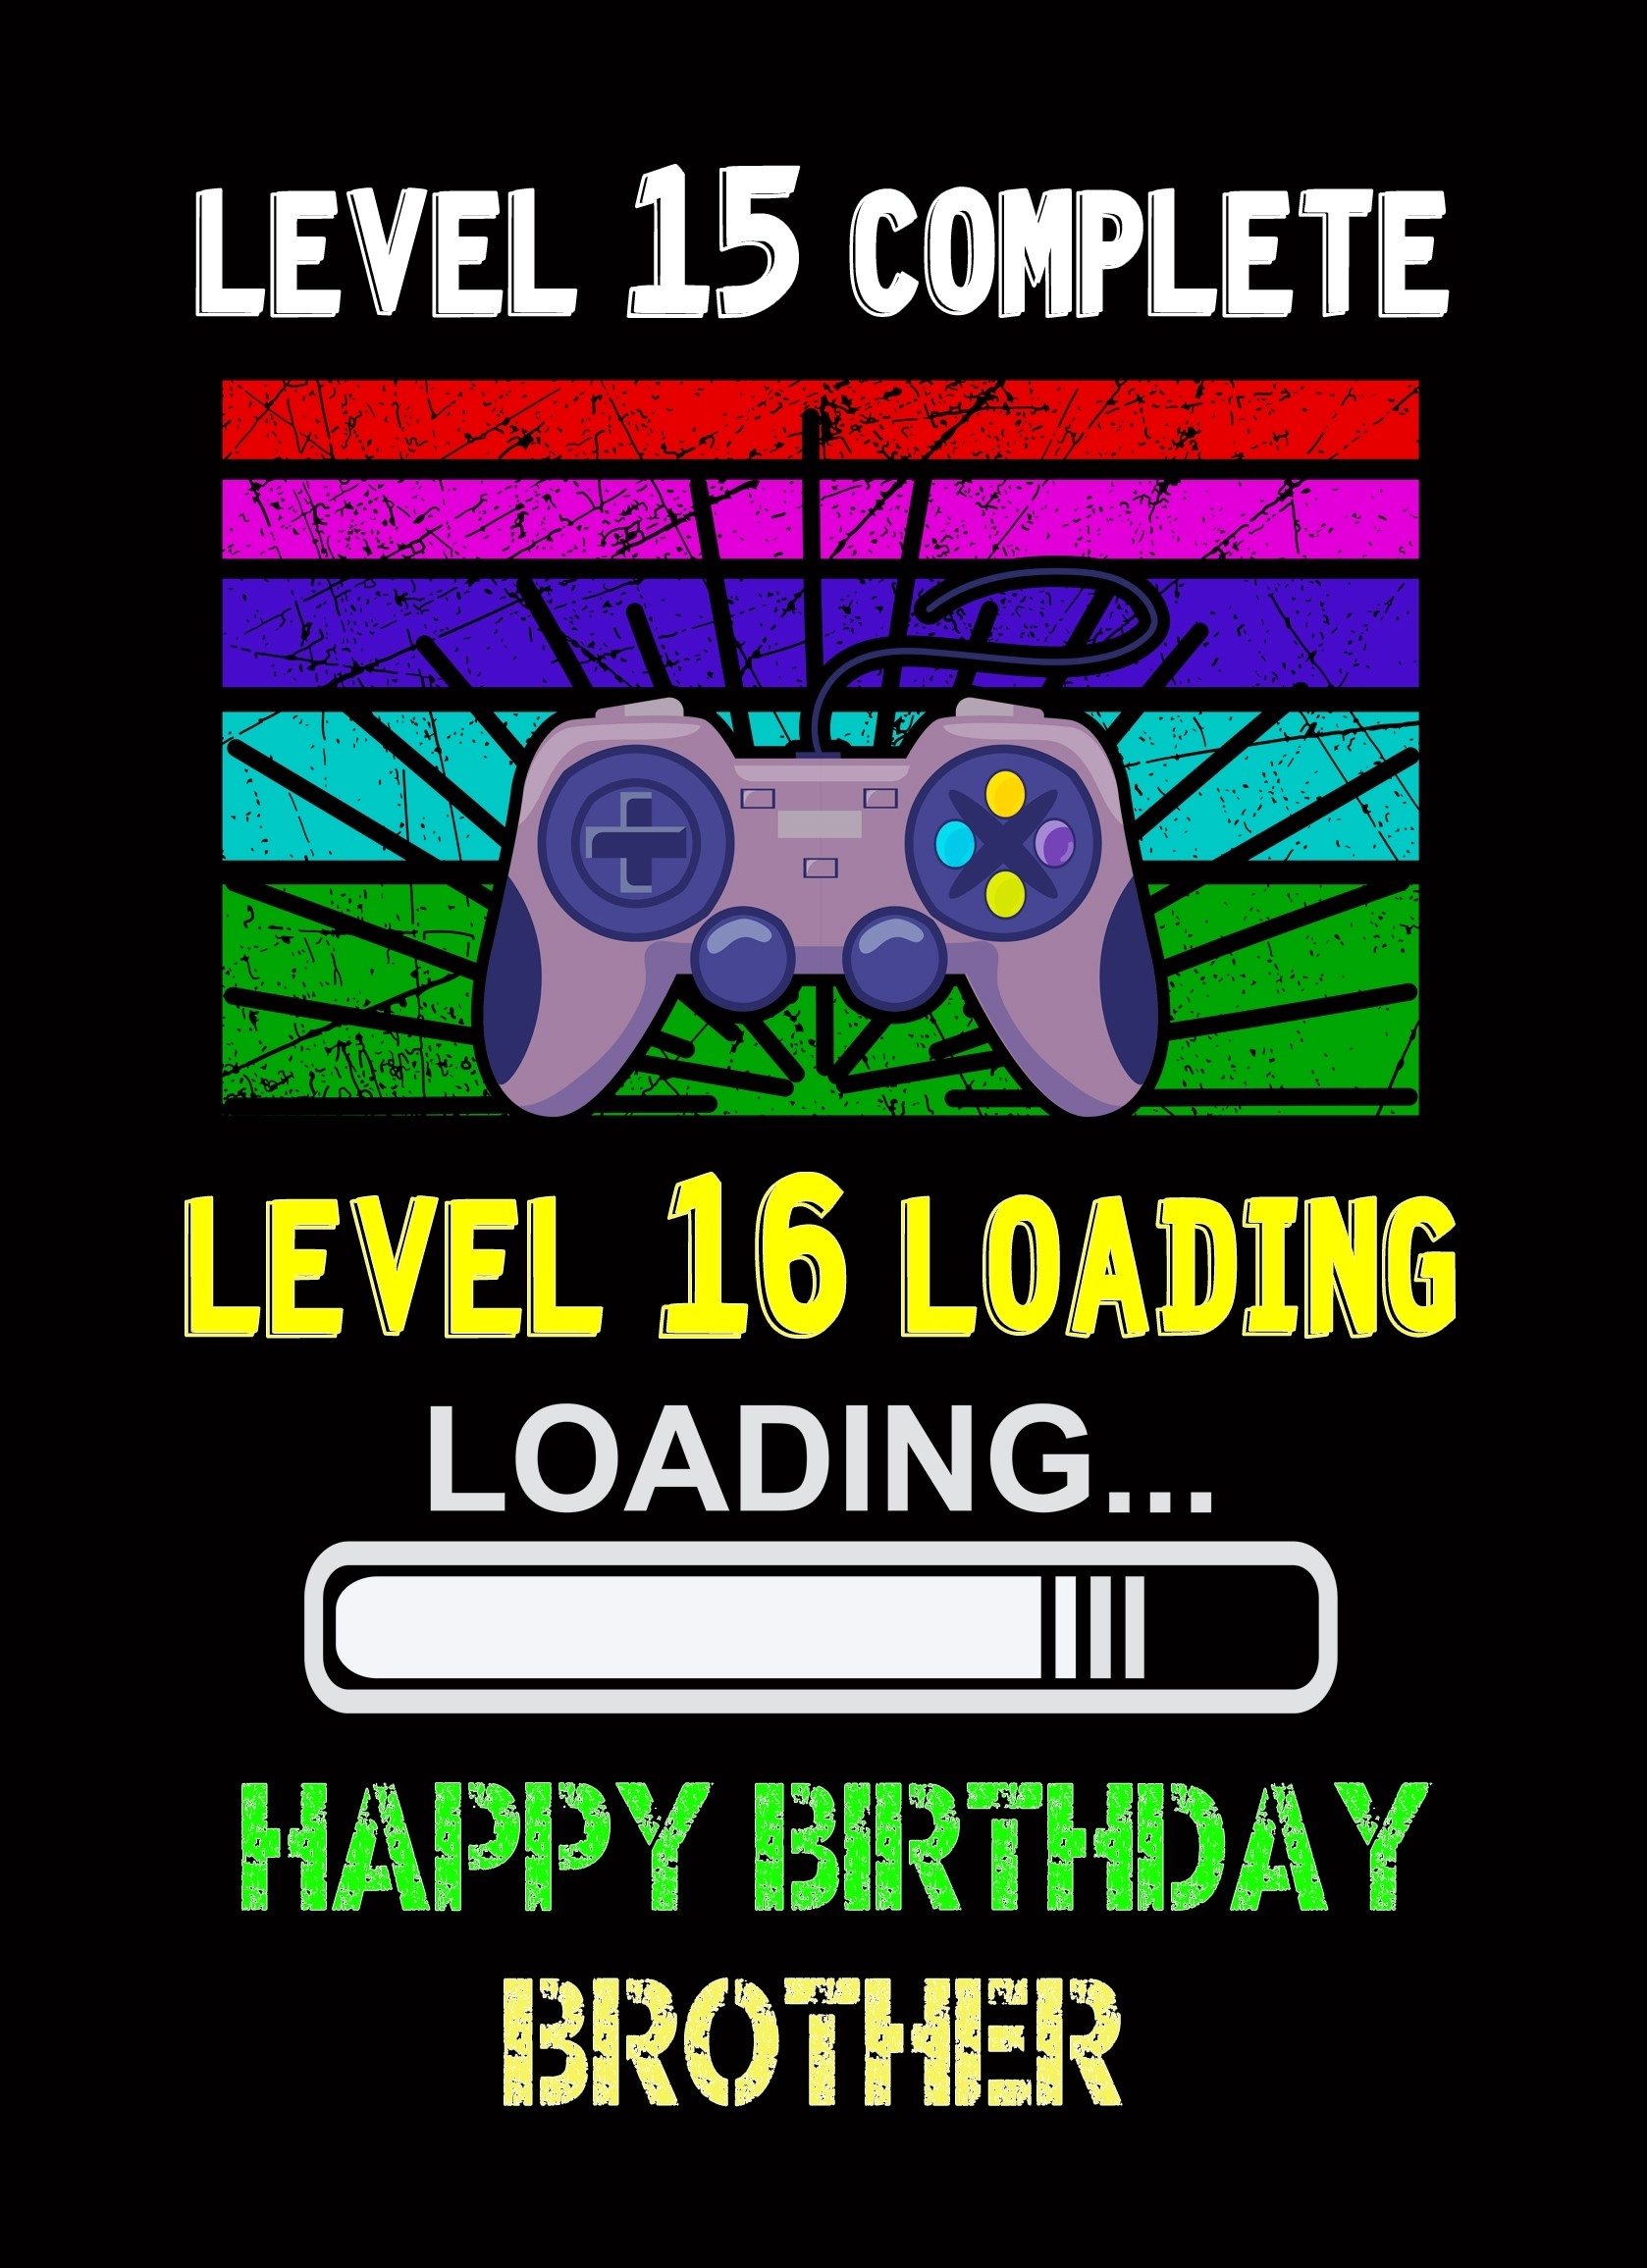 Brother 16th Birthday Card (Gamer, Design 2)